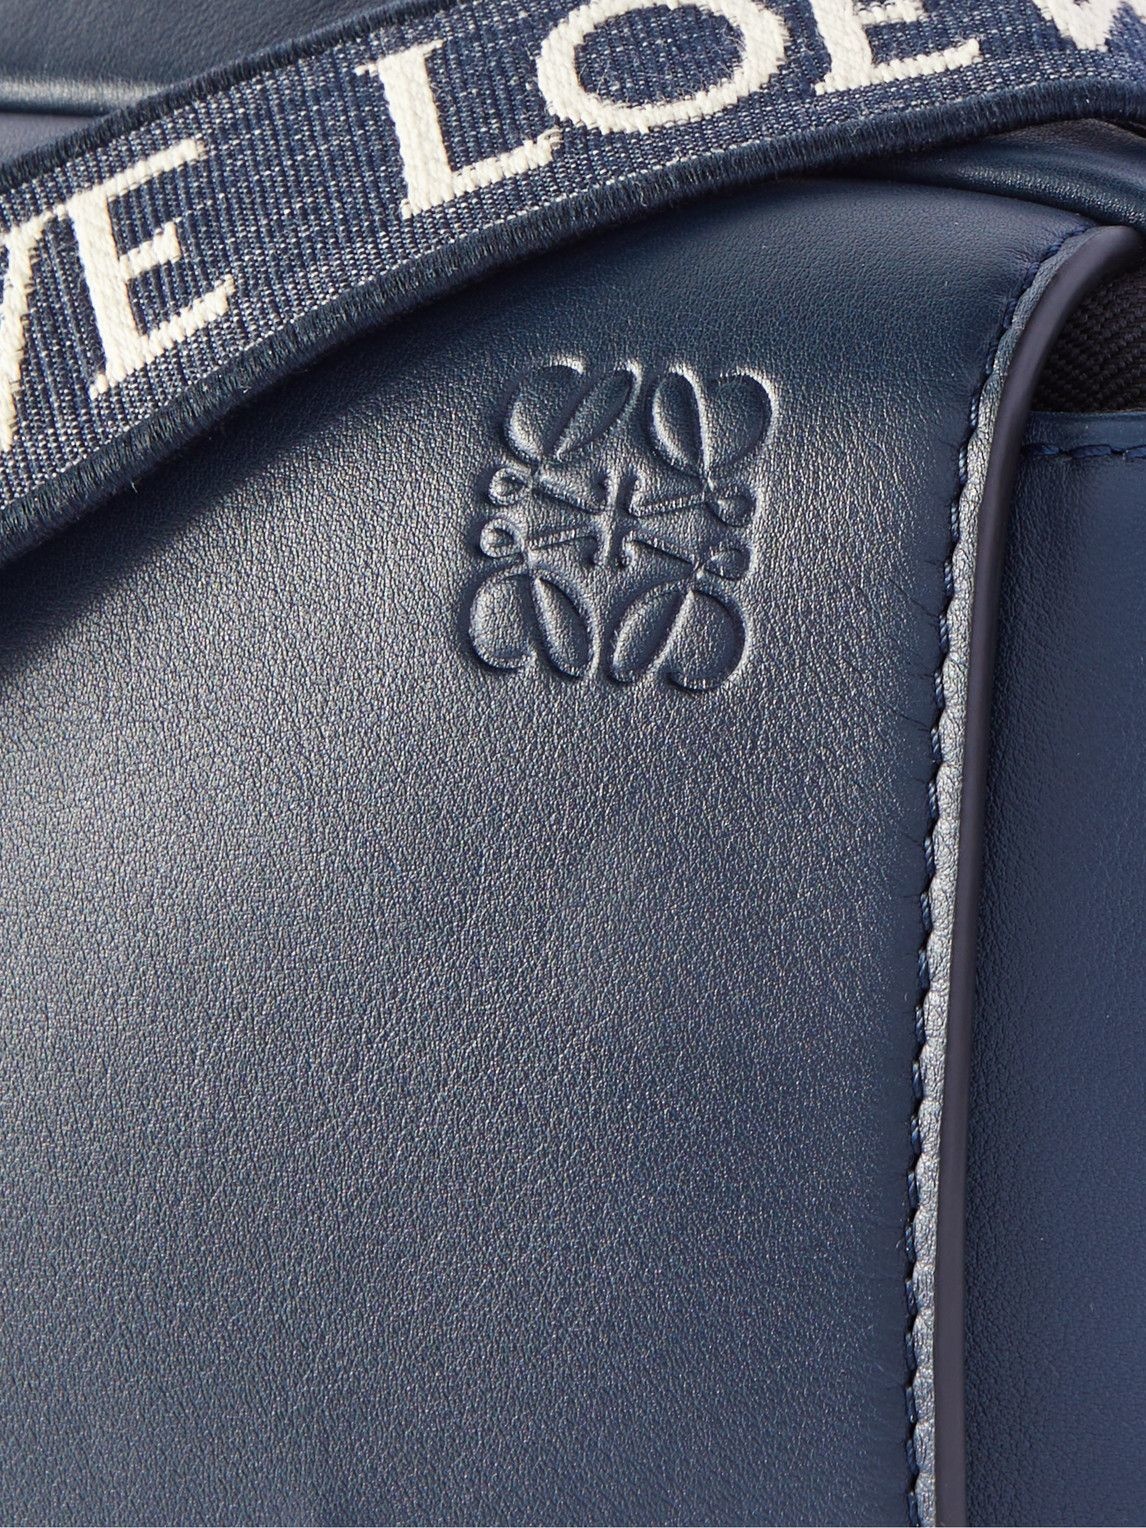 LOEWE Goya Puffer Logo-Embellished Shell Messenger Bag for Men